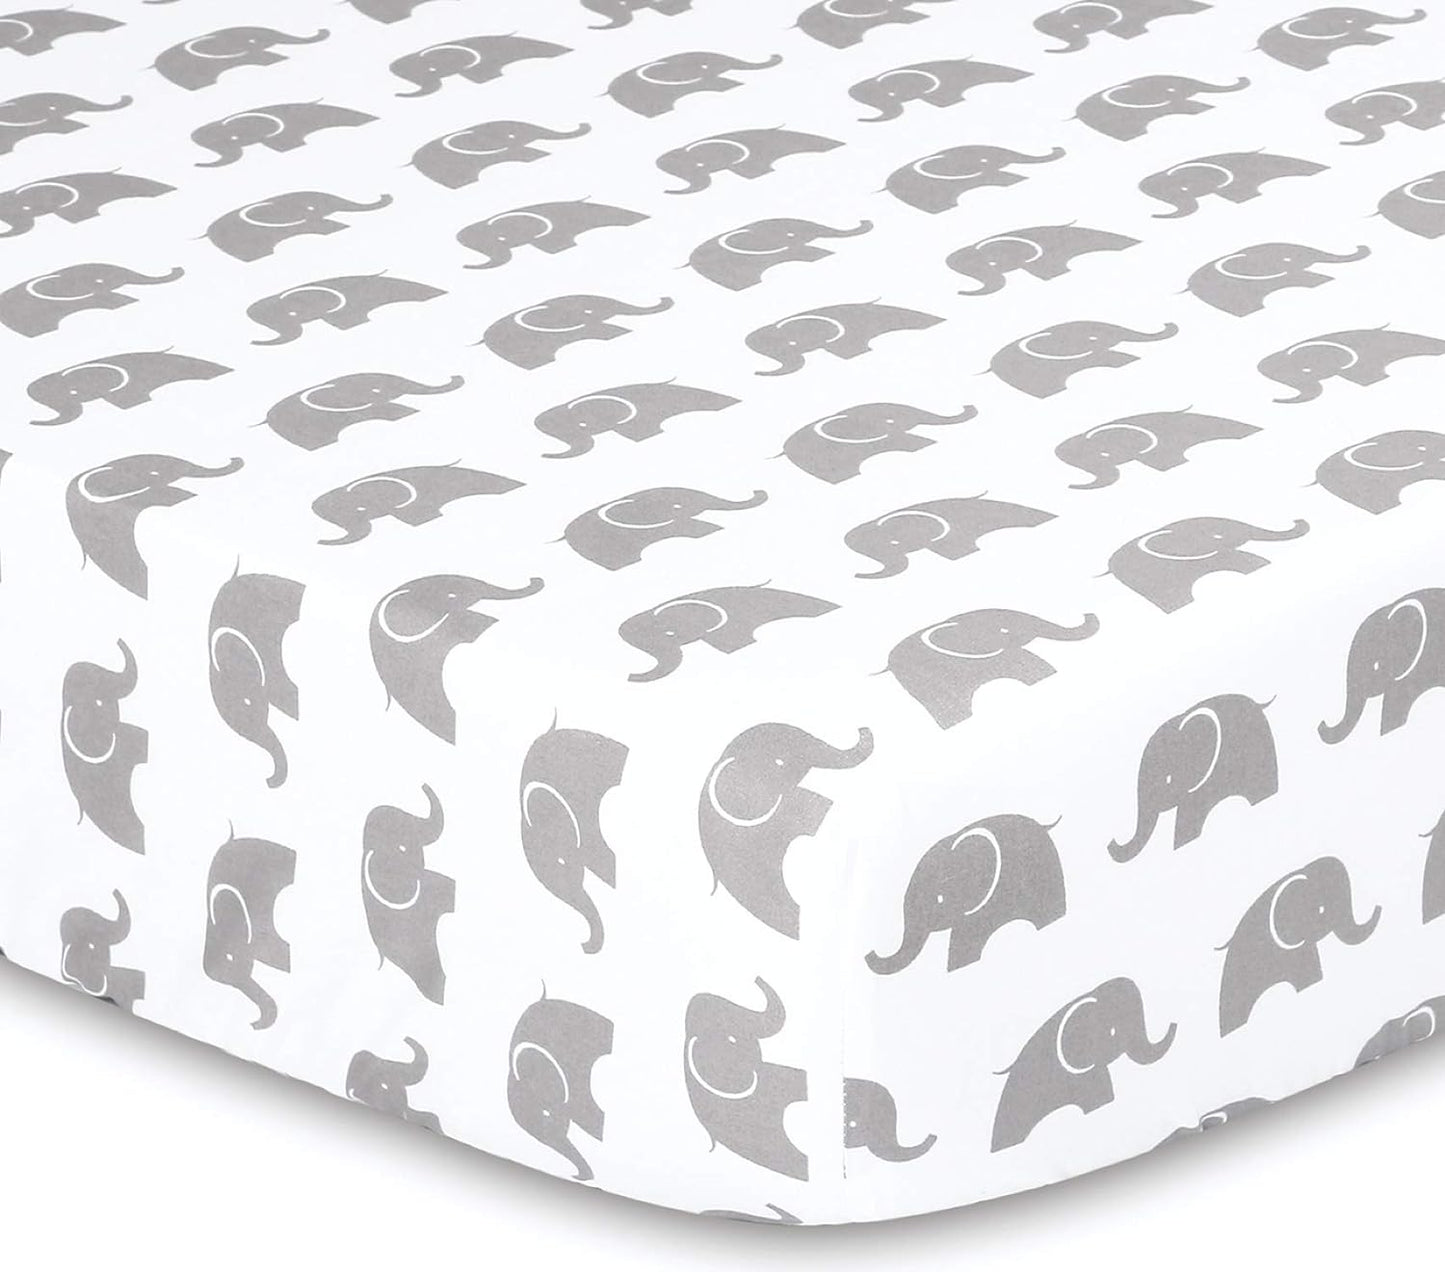 Elephant Walk Crib Bedding Set - 3 Piece Unisex Nursery Set - Crib Quilt, Crib Sheet, Crib Skirt